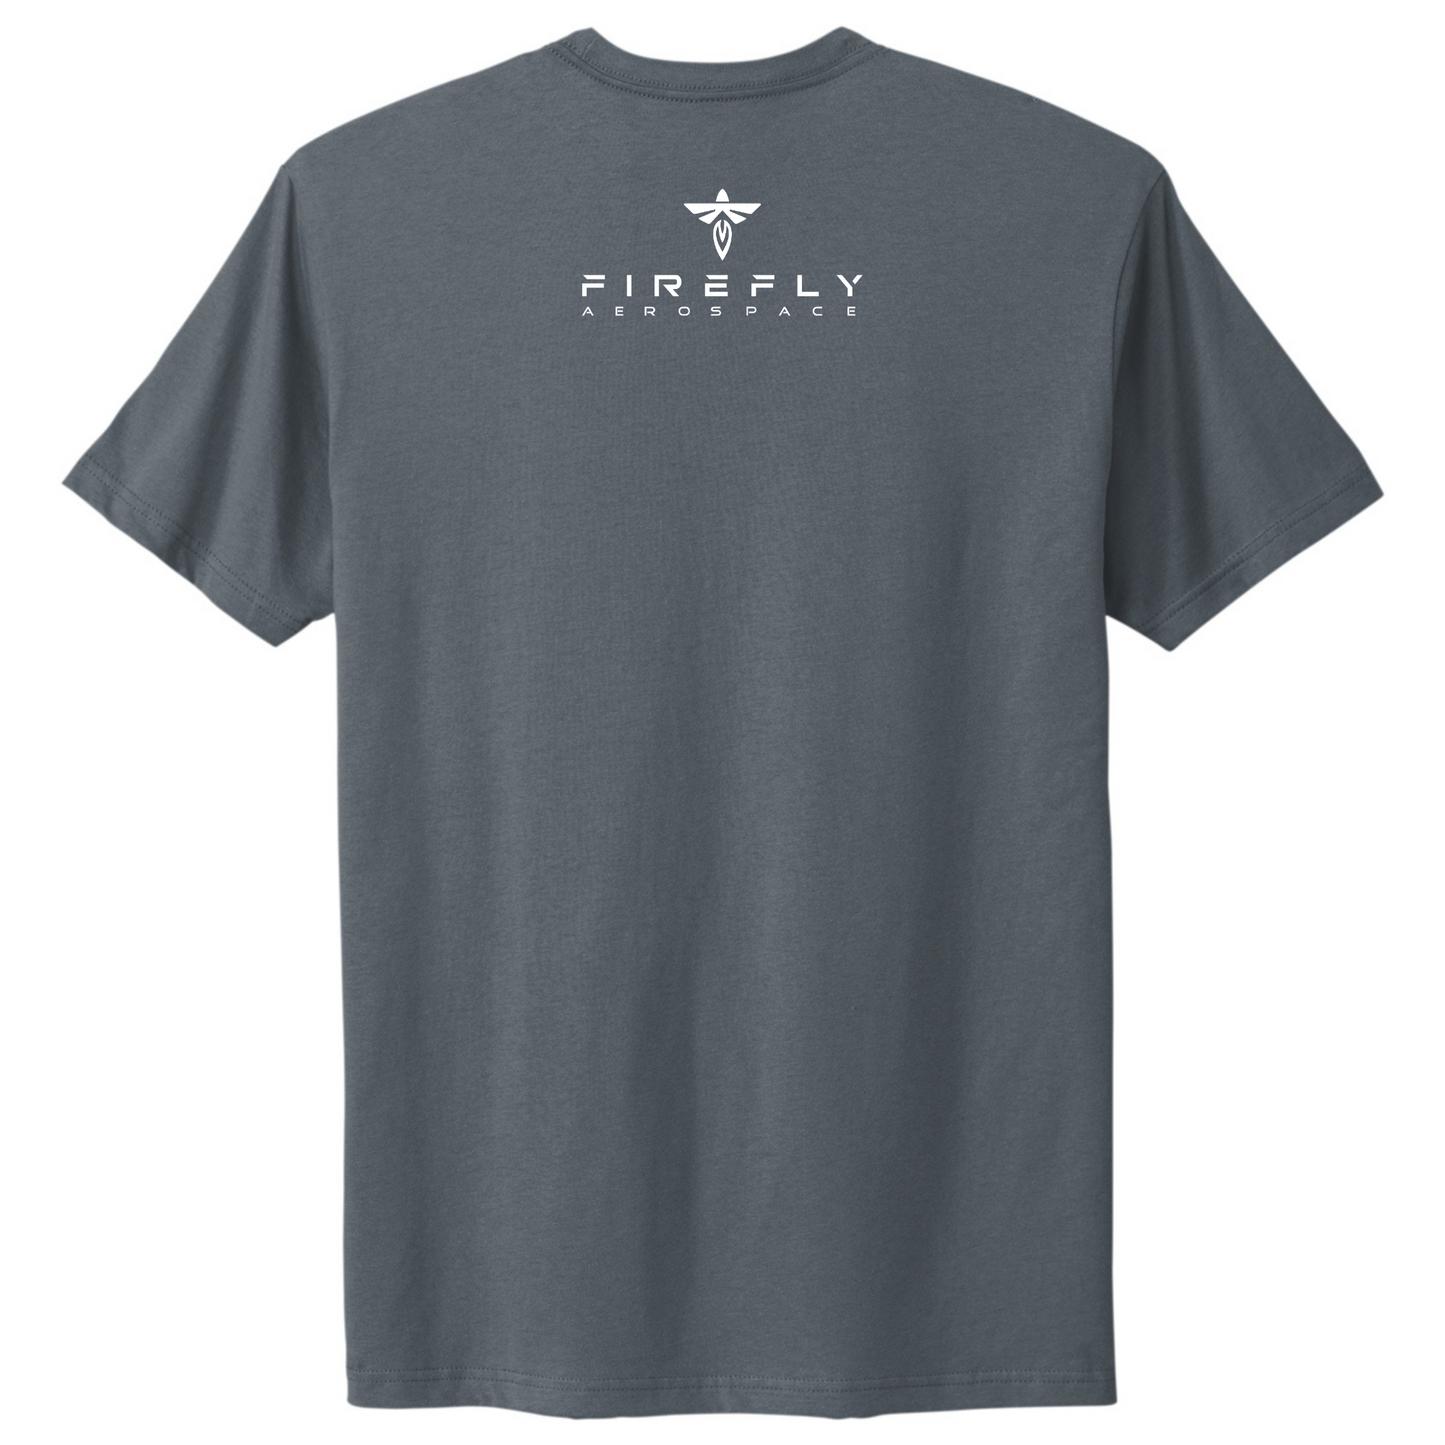 (Employee) Launch Land Orbit T-Shirt